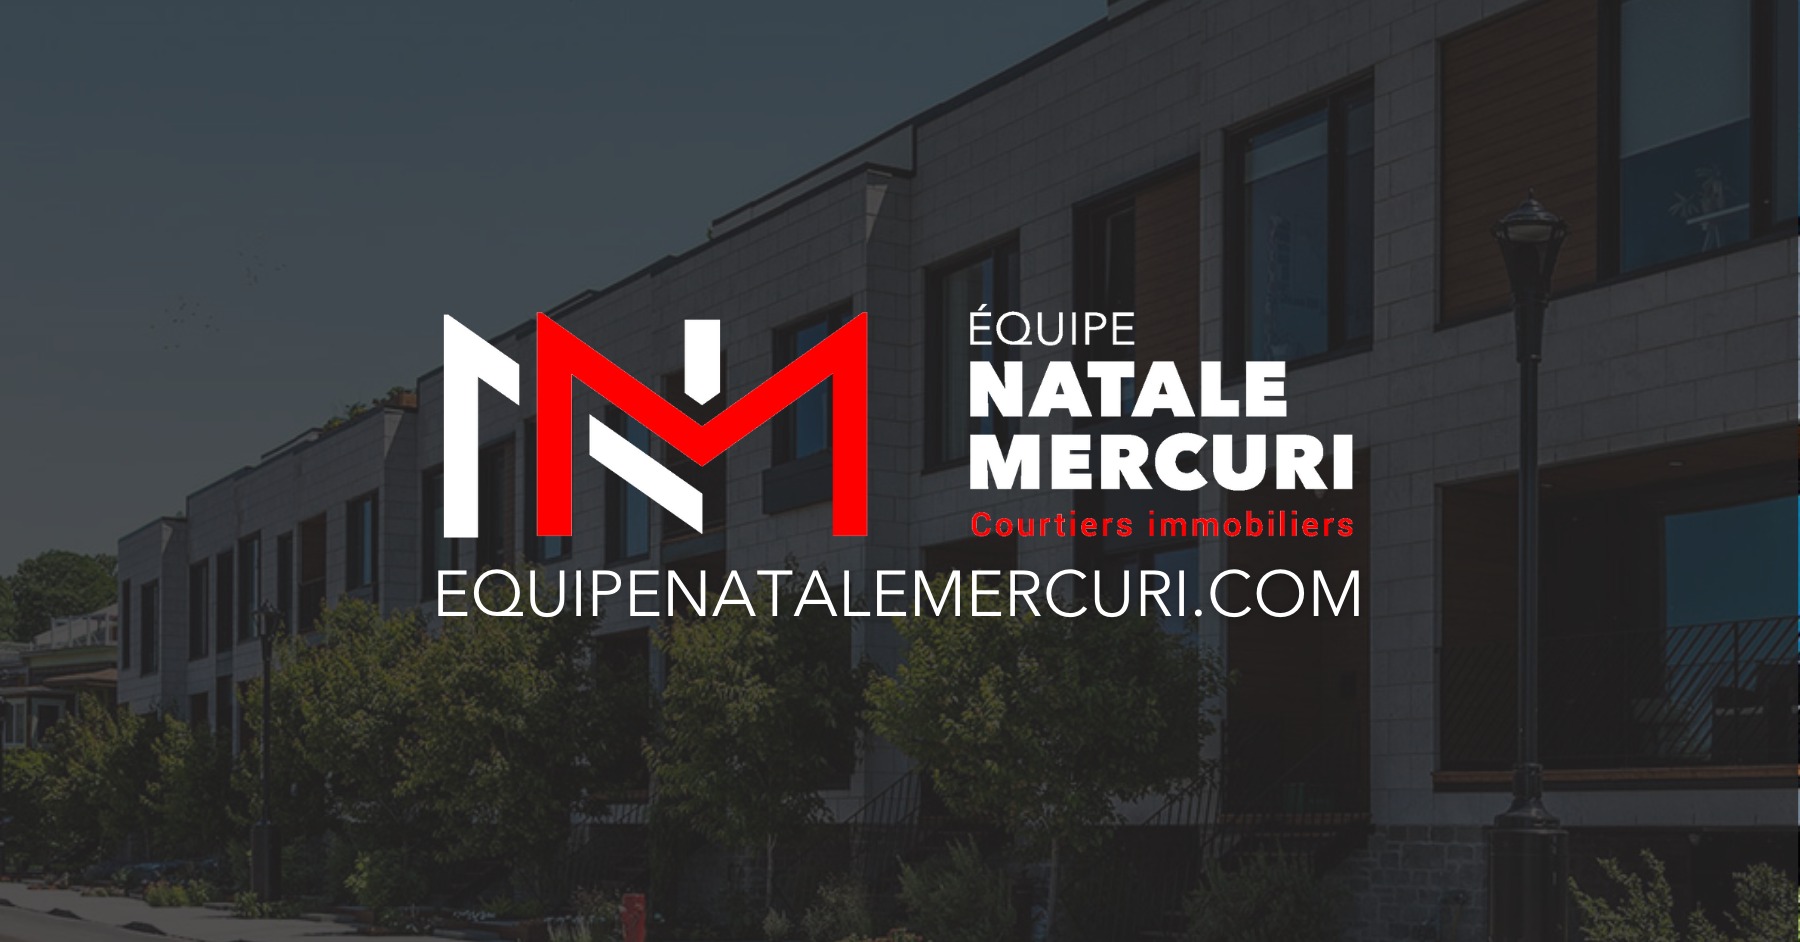 Équipe Natale Mercuri courtiers immobiliers